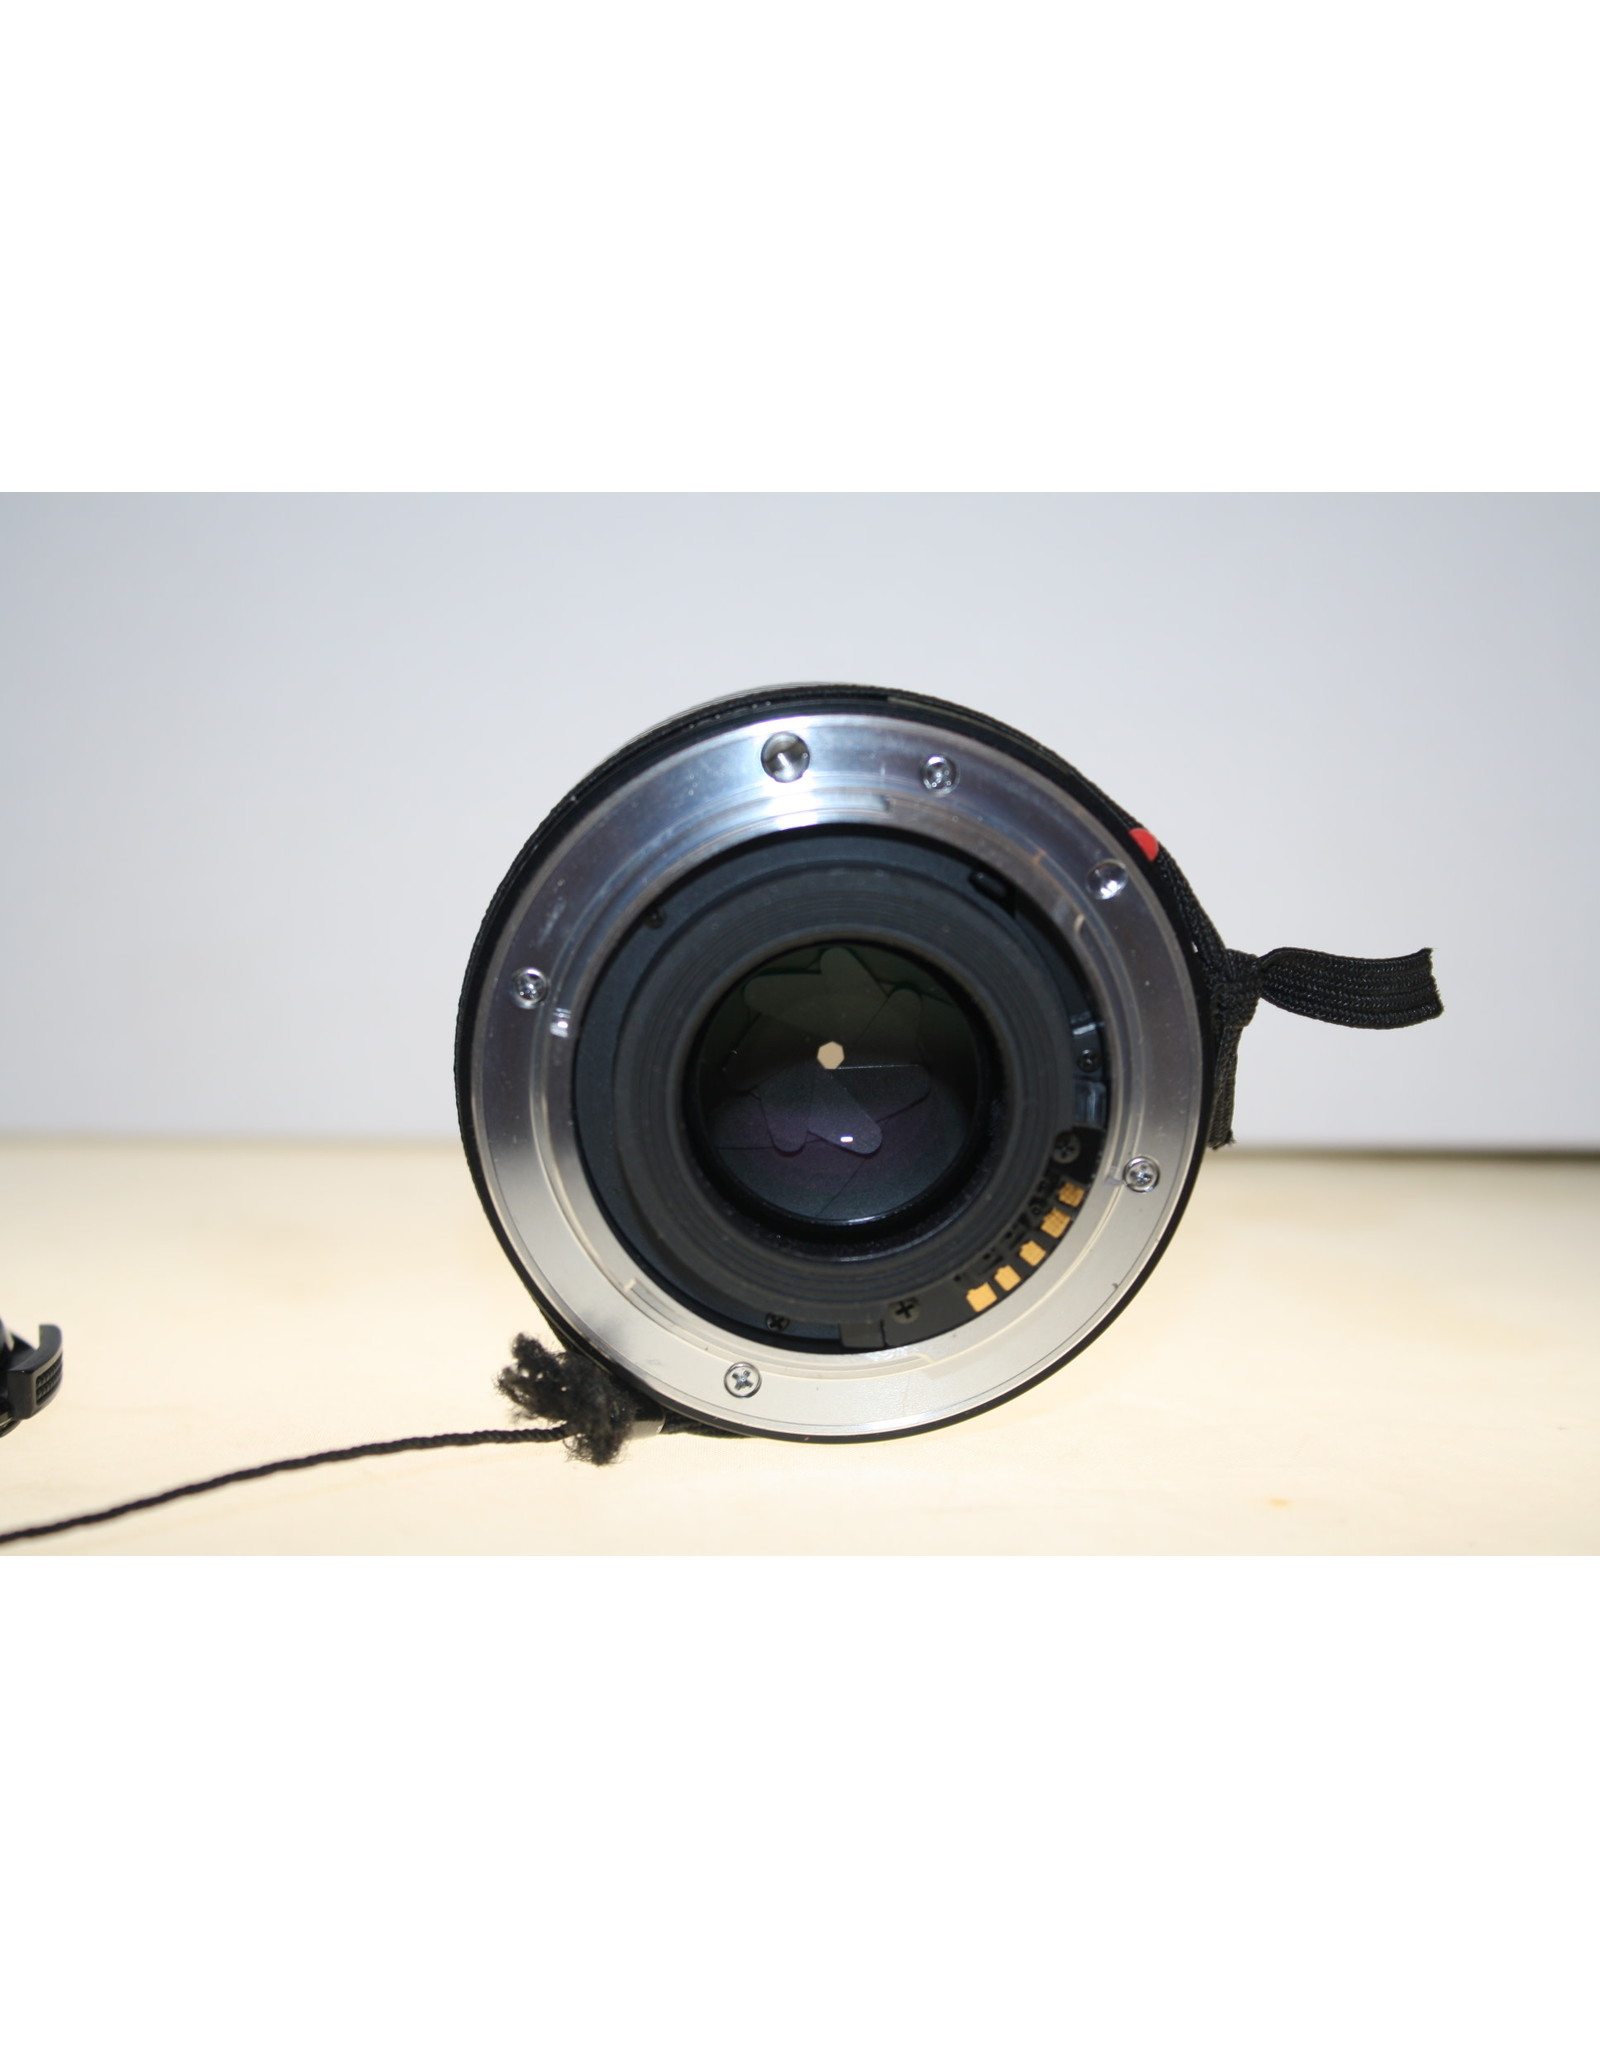 Konica Minolta Minolta Maxxum 50mm 1.7 Lens (Pre-owned)